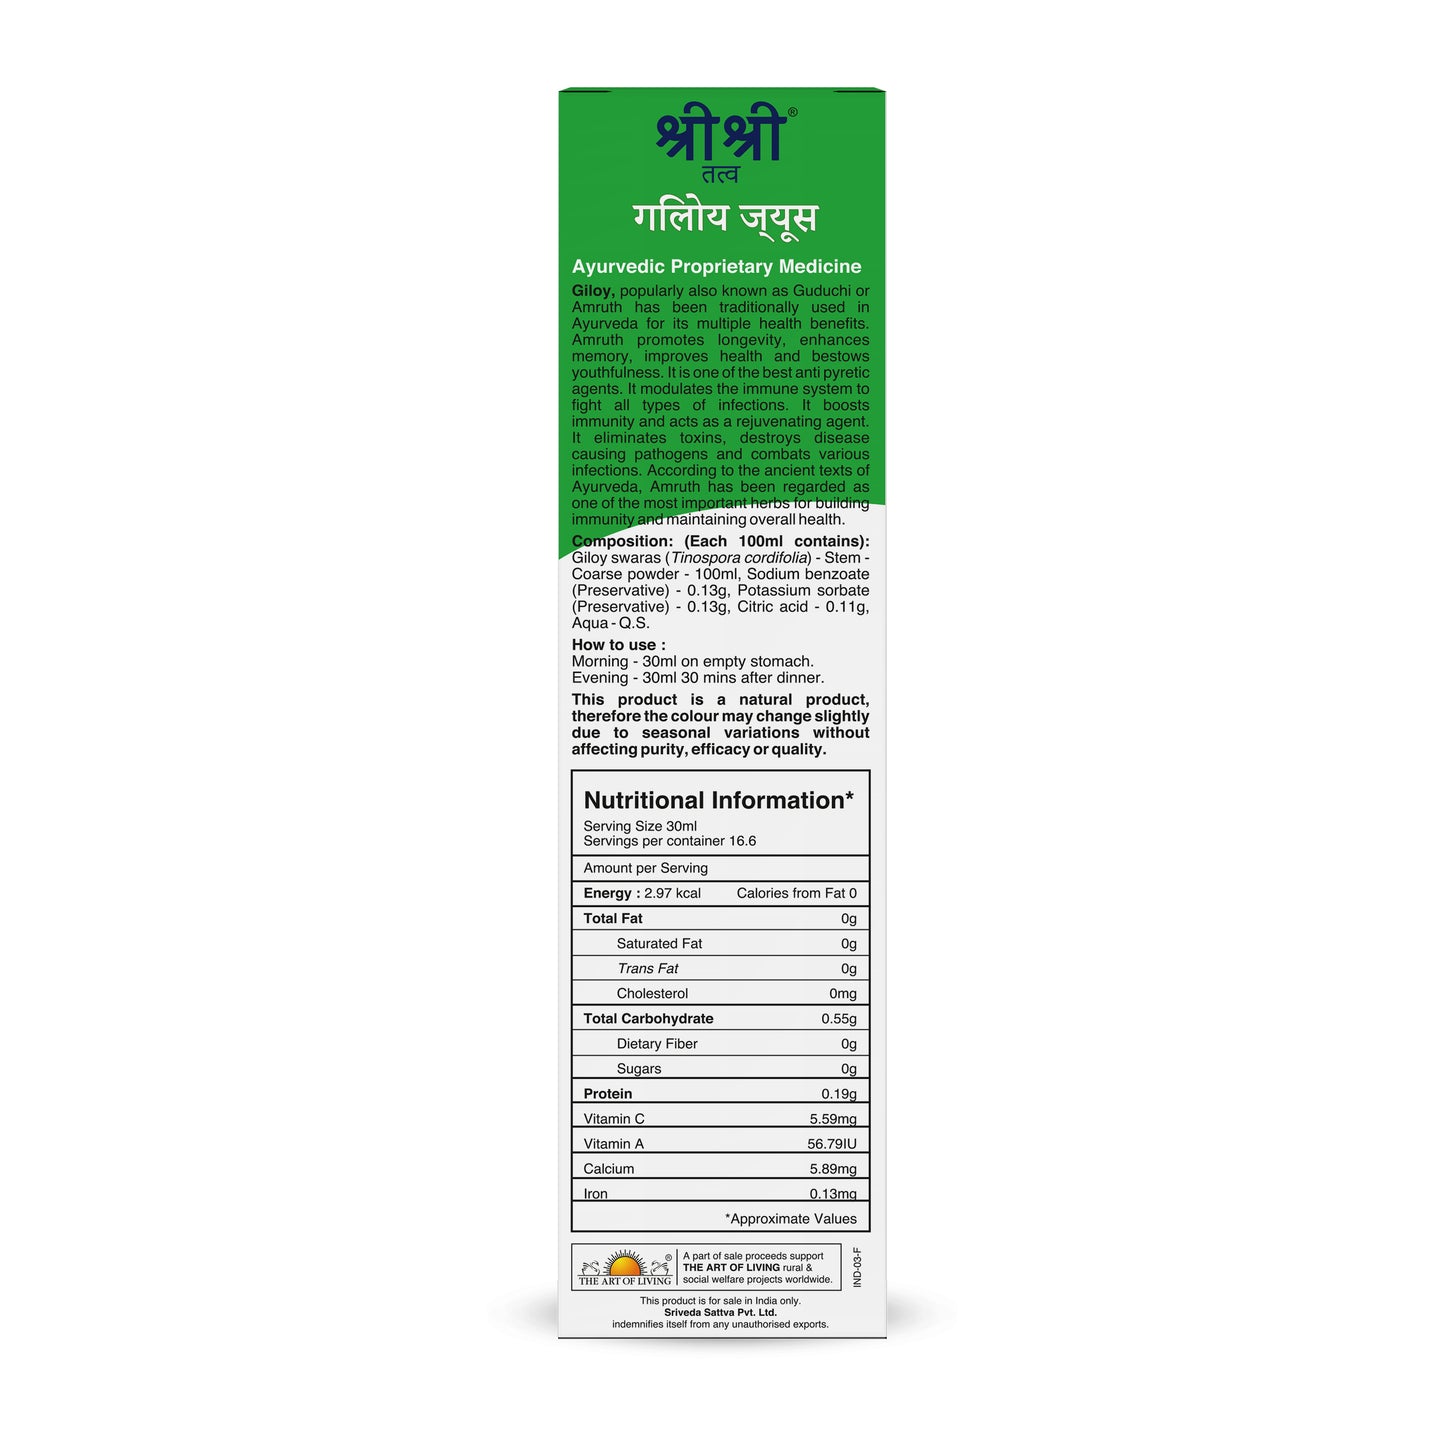 Giloy Juice | Enhances Memory, Improves Health | 500 ml